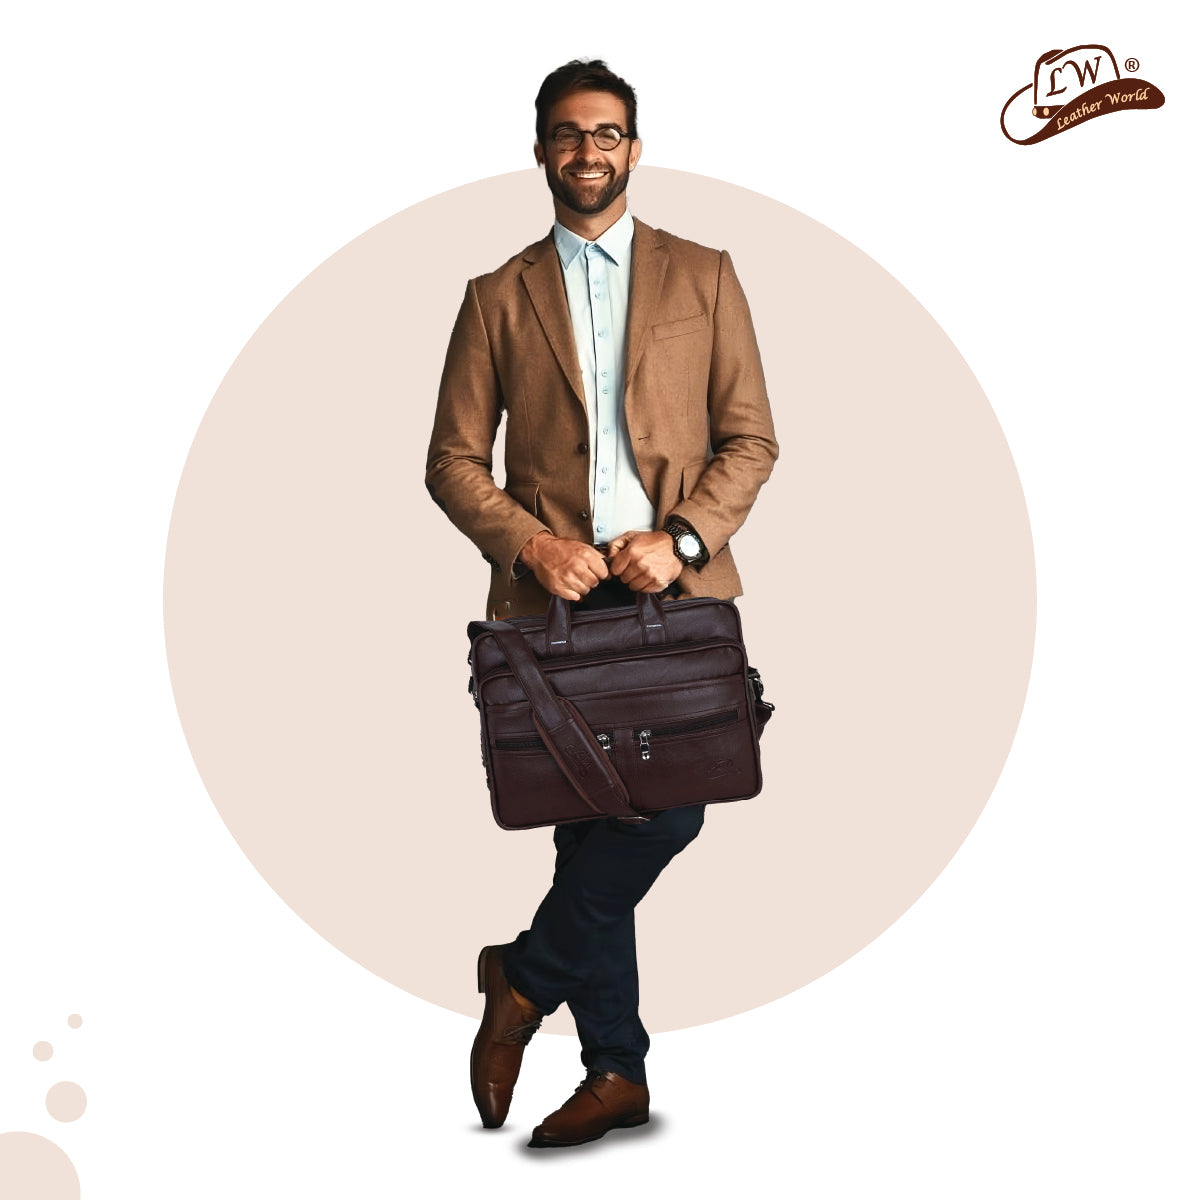 Casual Waterproof Laptop Backpack/Office Bag/School Bag/College Bag/Business  Bag/Unisex Travel Backpack